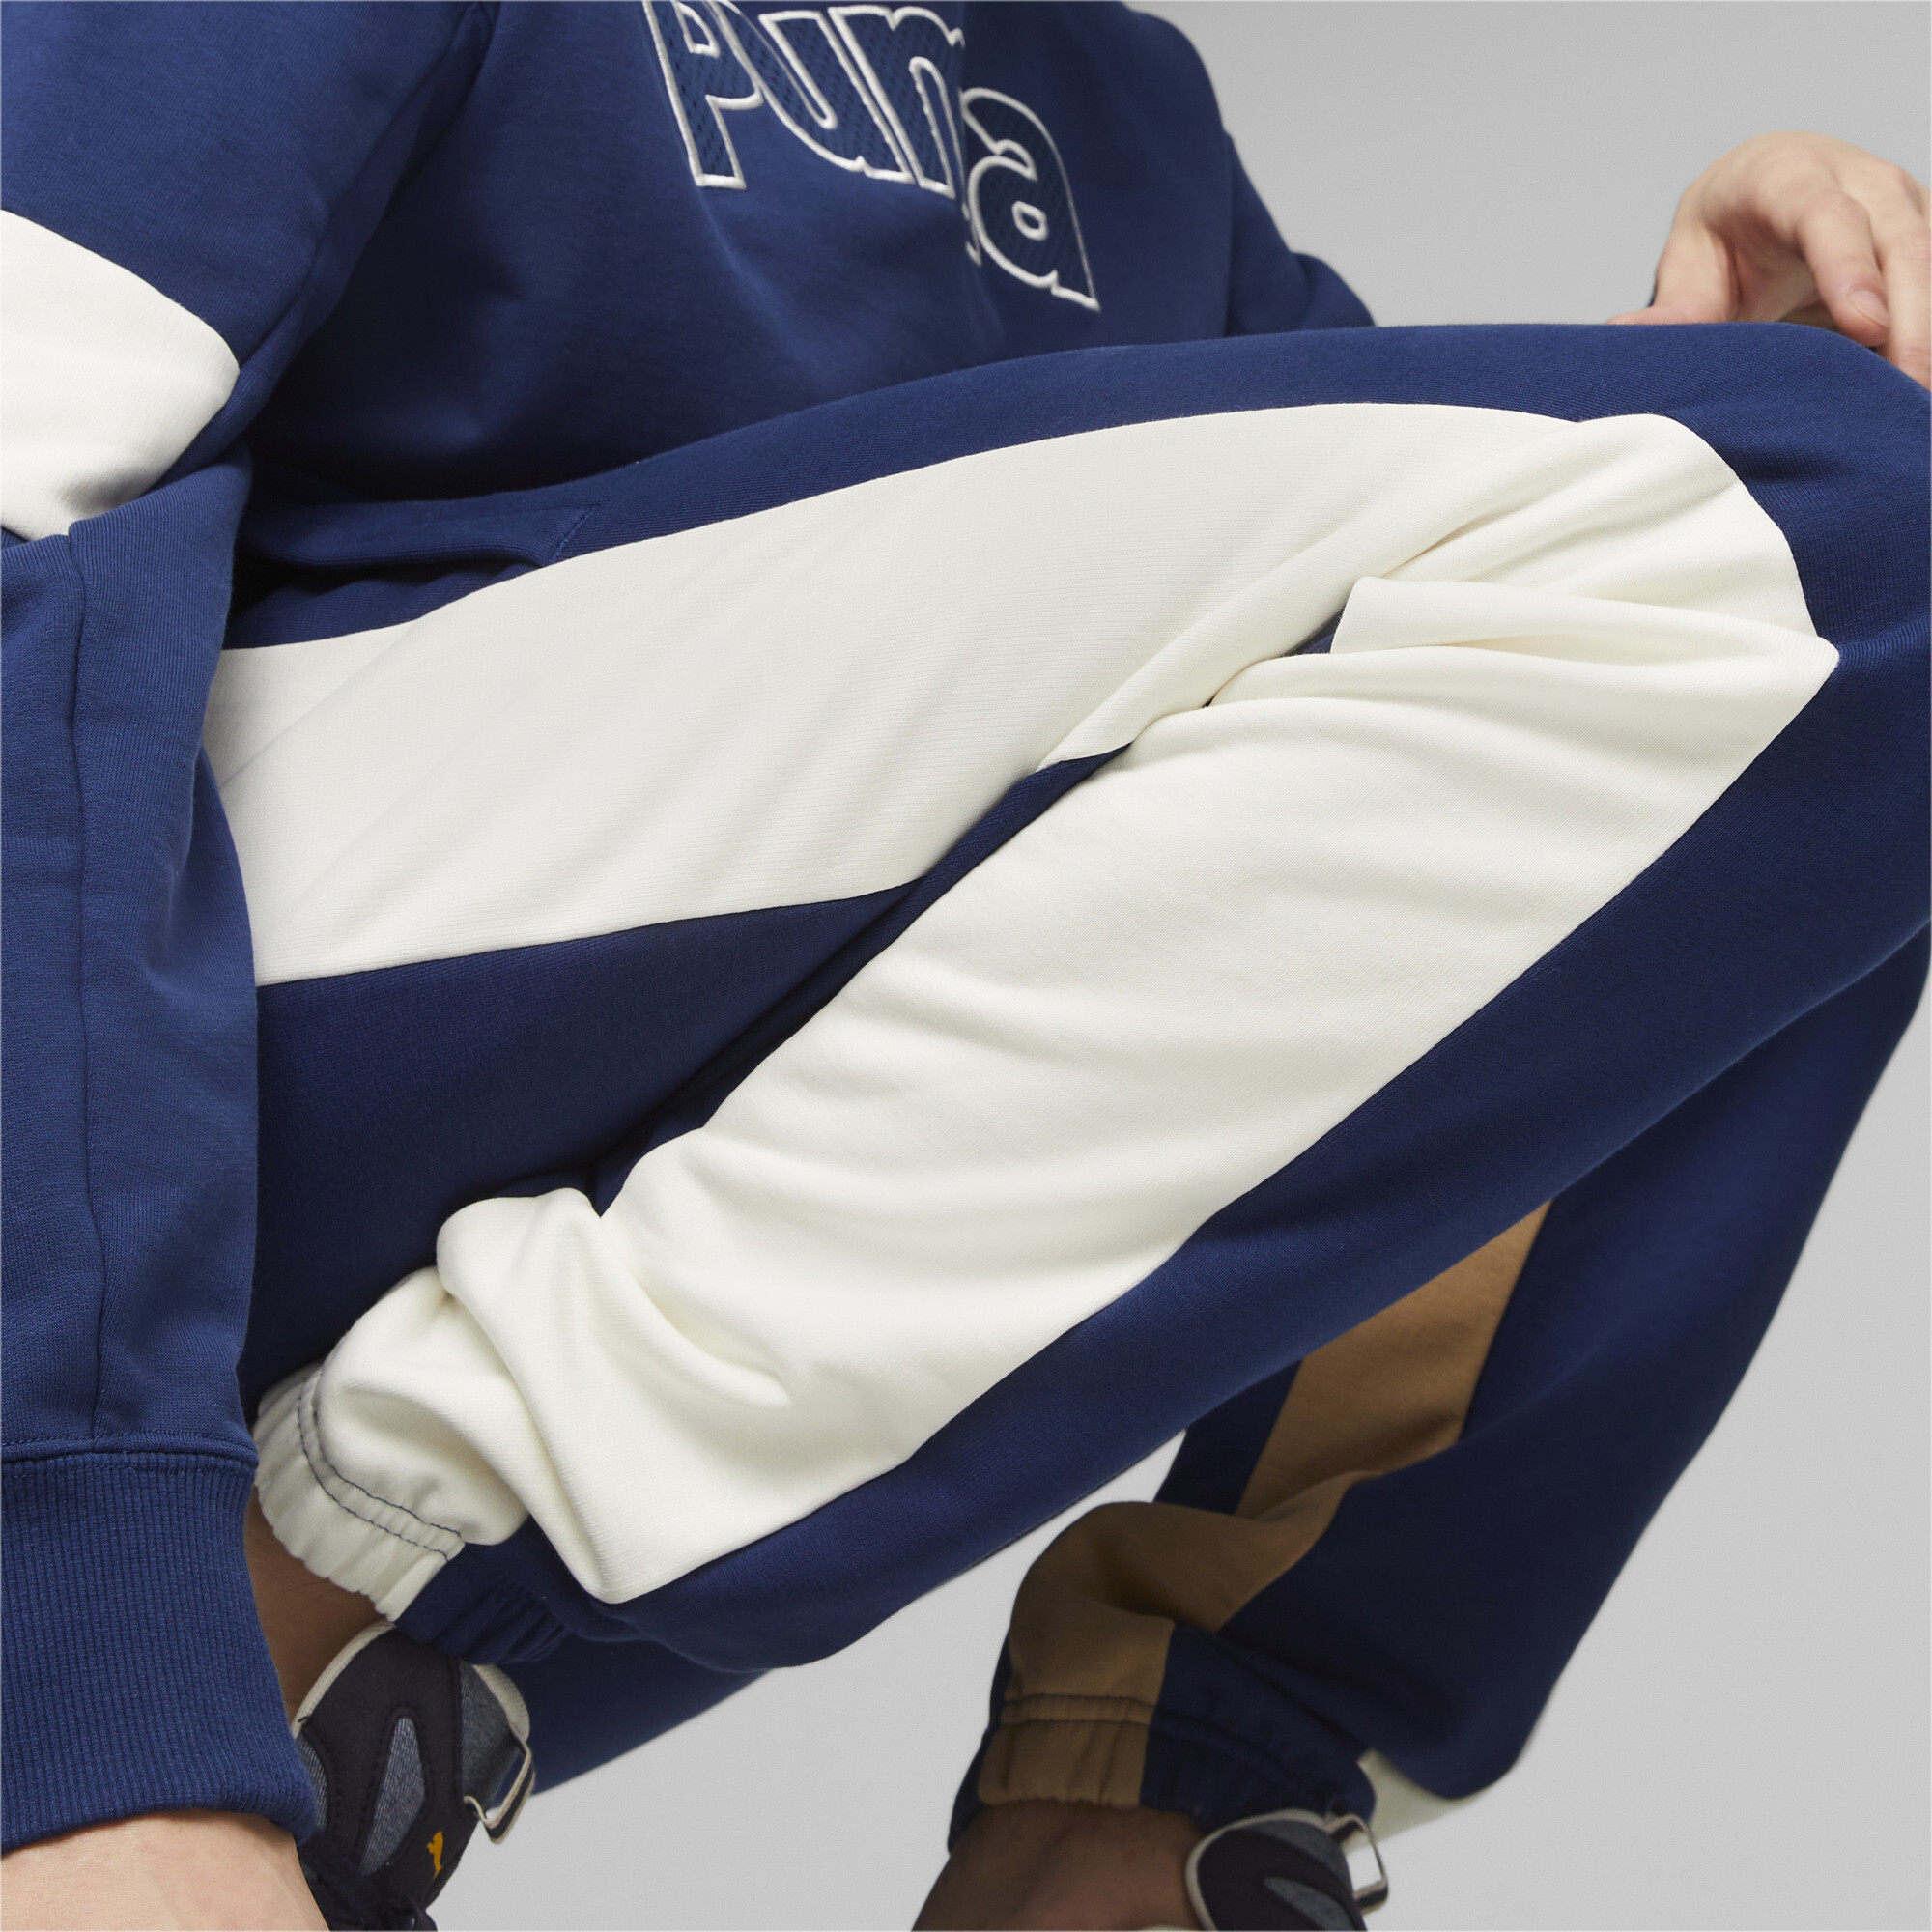 Men's Puma Classics Block's Sweatpants, Blue, Size XS, Clothing